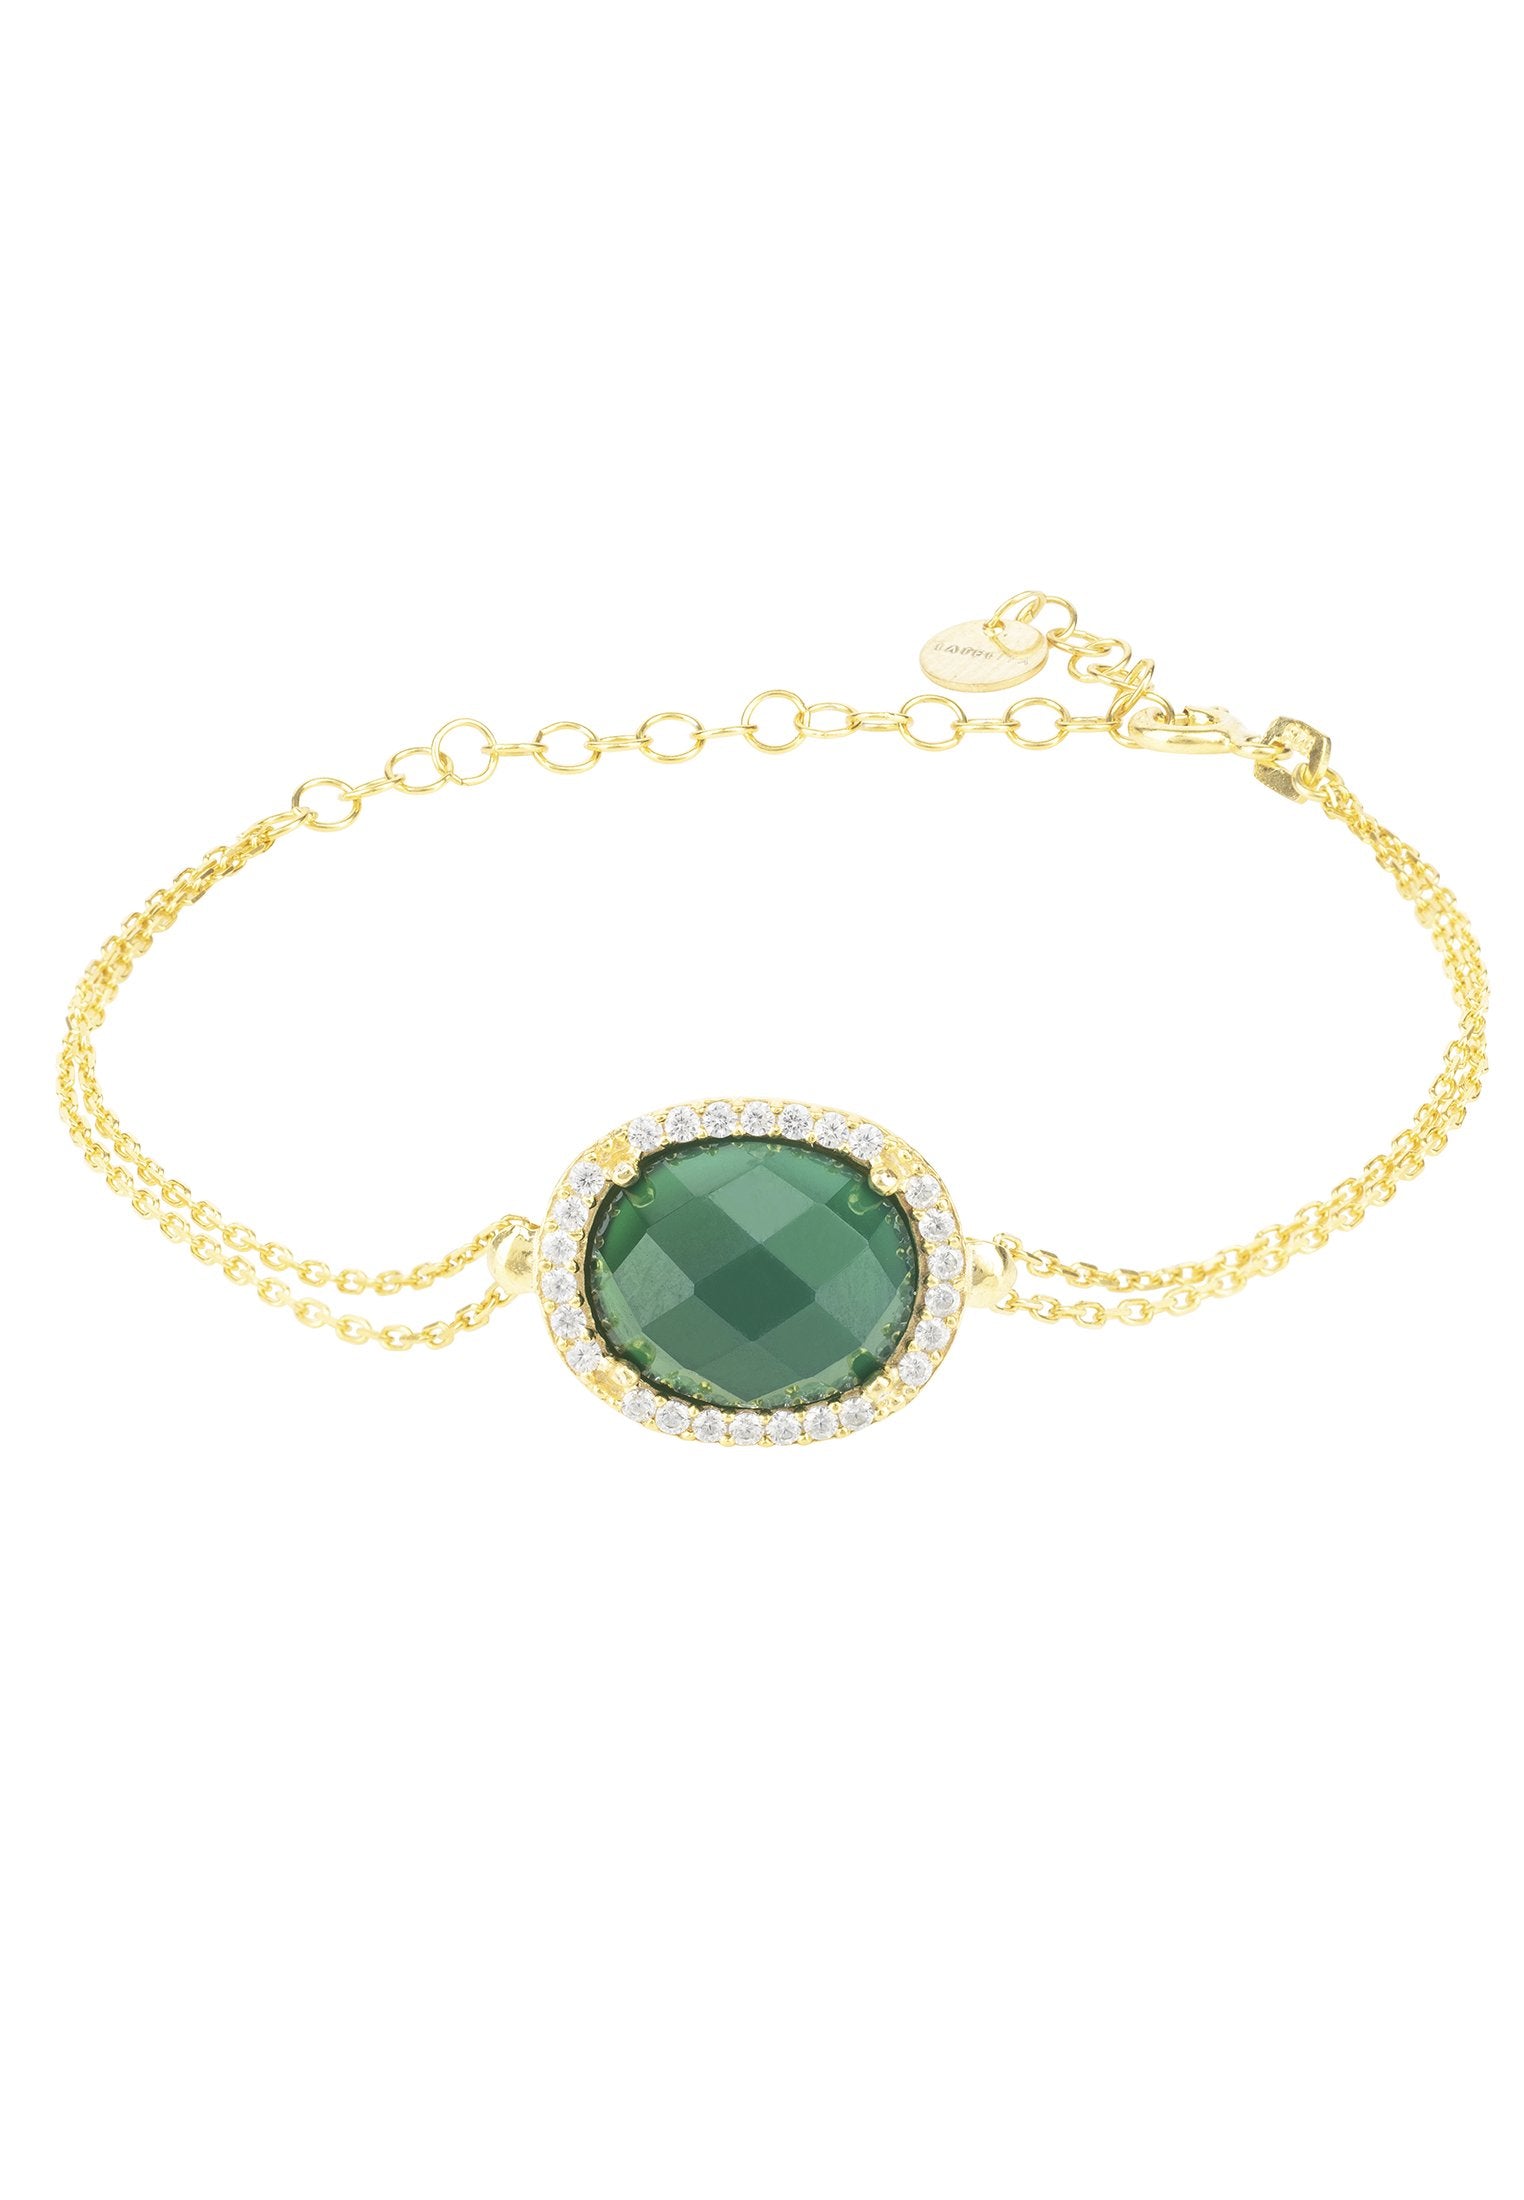 Regal Green Onyx Oval Gemstone Bracelet in Gold with CZ Detailing - Jewelry & Watches - Bijou Her -  -  - 